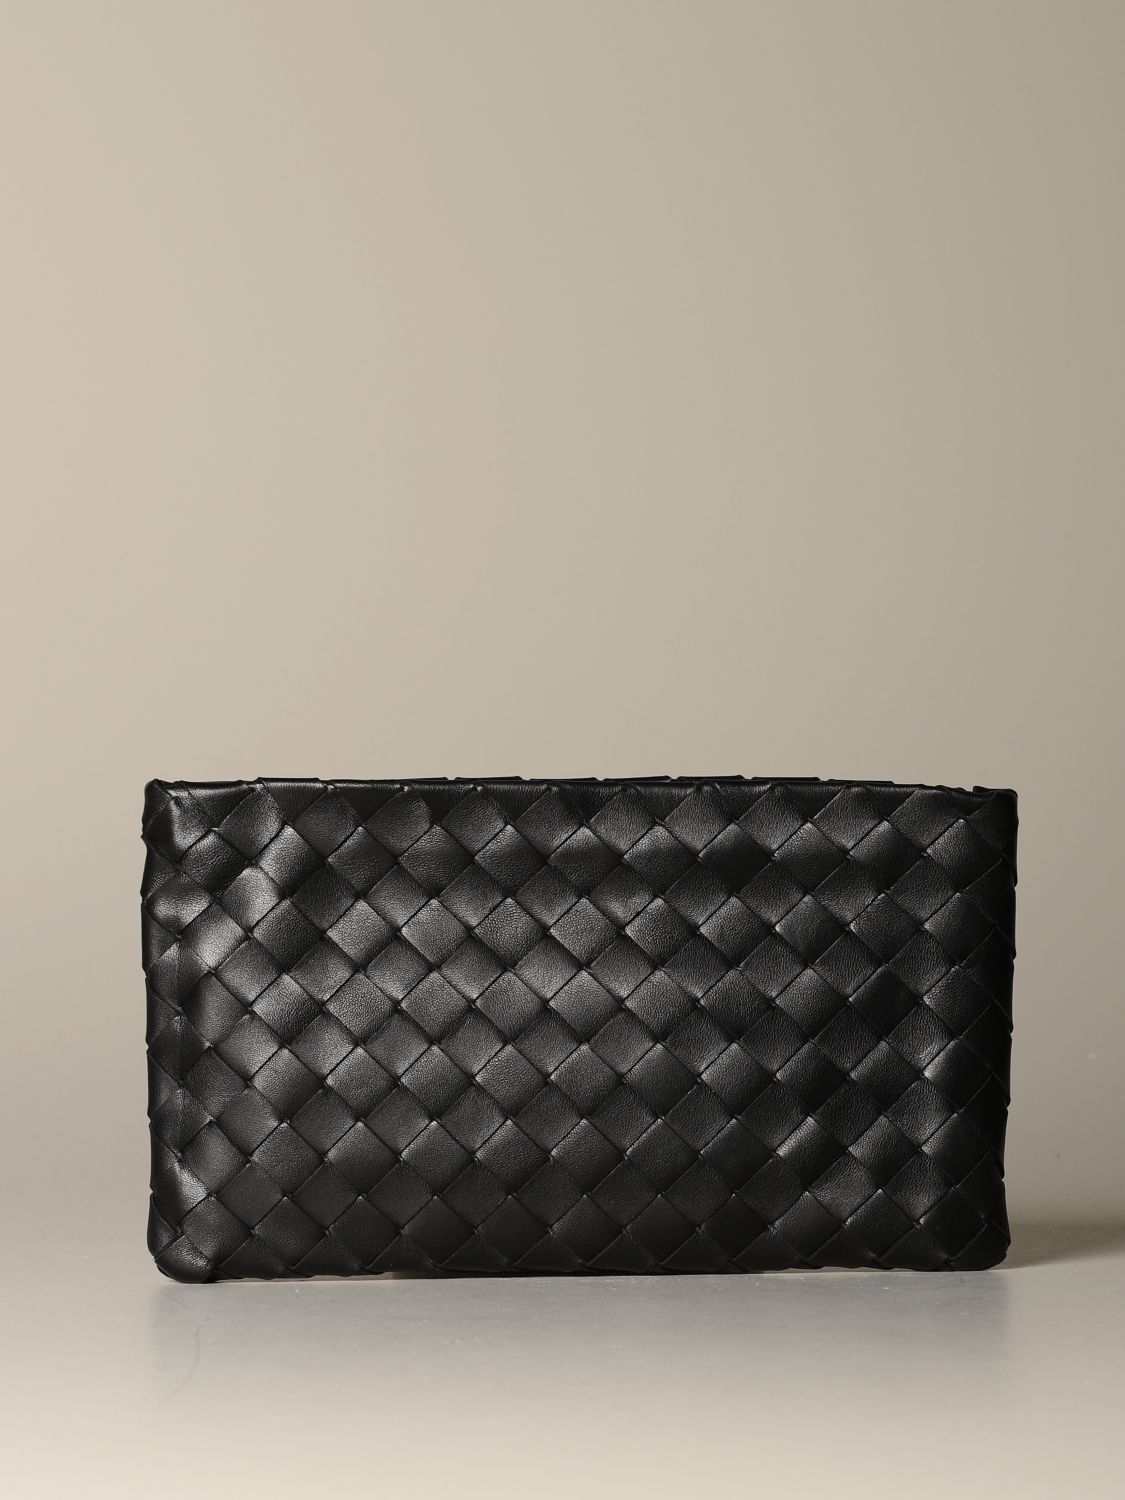 BOTTEGA VENETA: Small clutch in woven leather - Black | Bottega Veneta ...